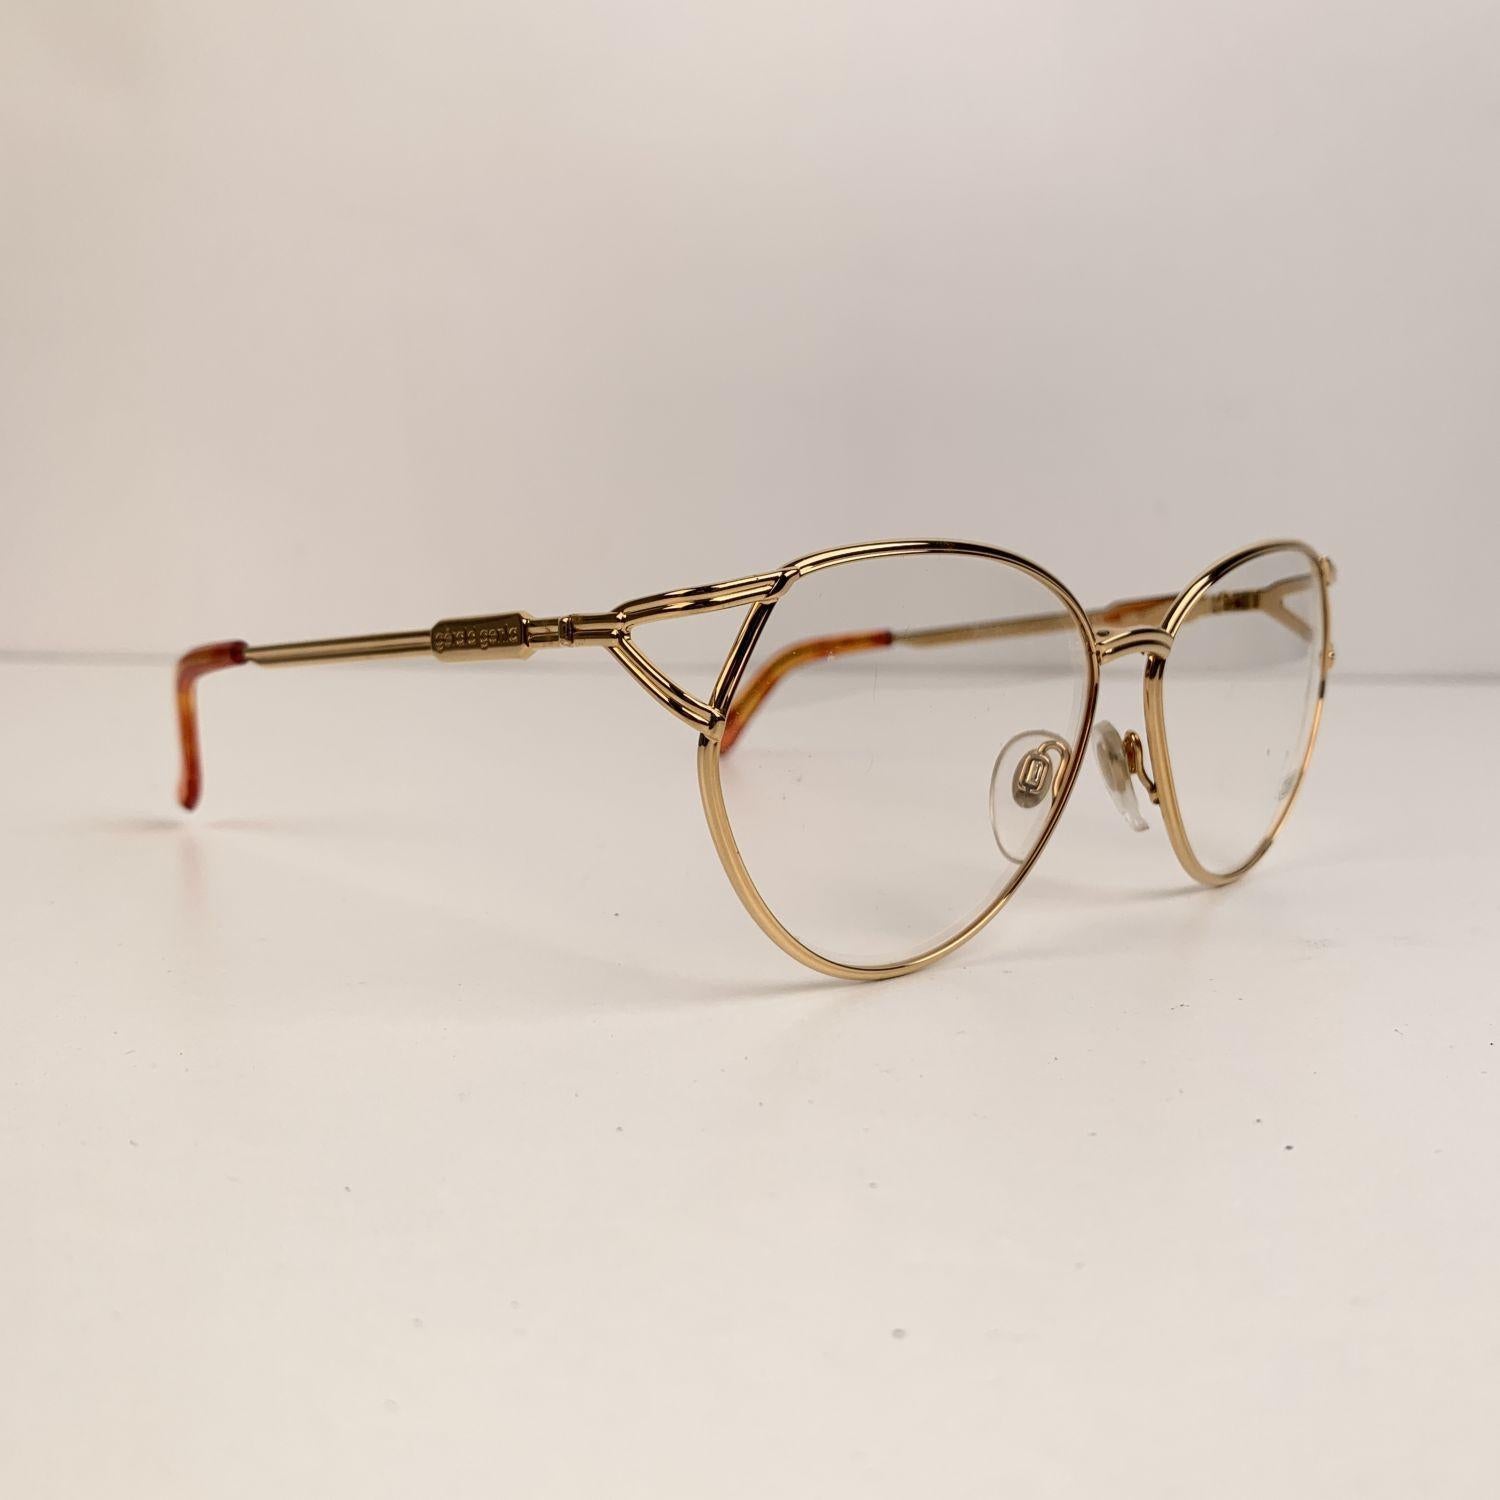 Gerald Genta Vintage Eyeglasses Gold Plated New Classic 05 130 mm 2